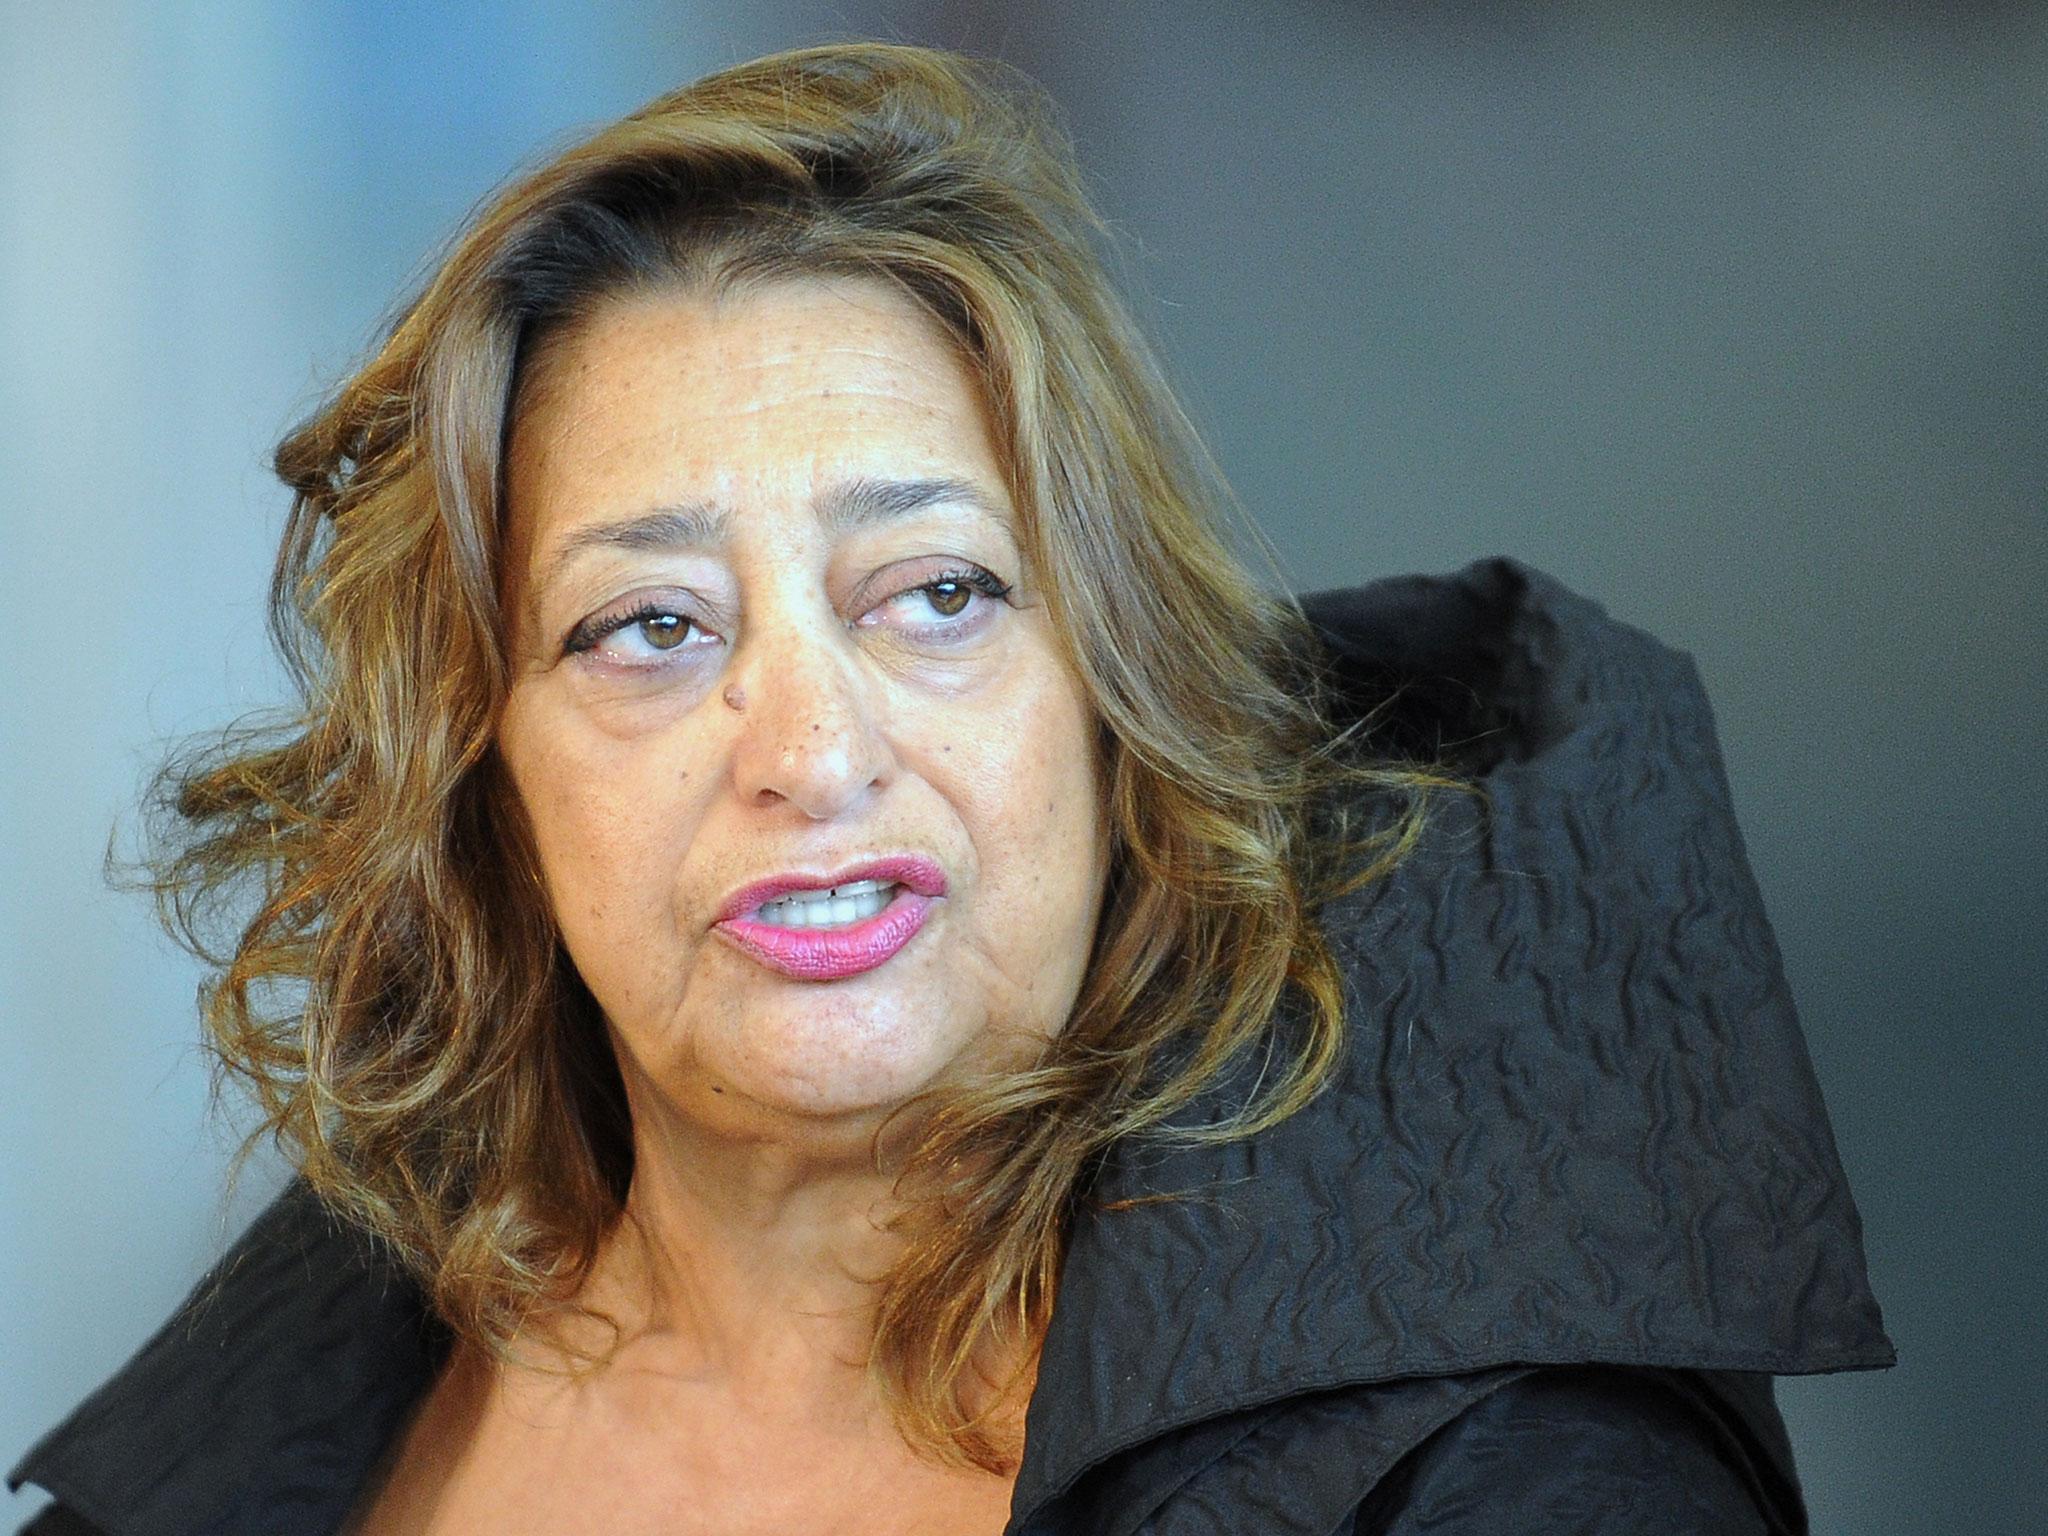 Dame Zaha Hadid – a celebrated yet divisive architect